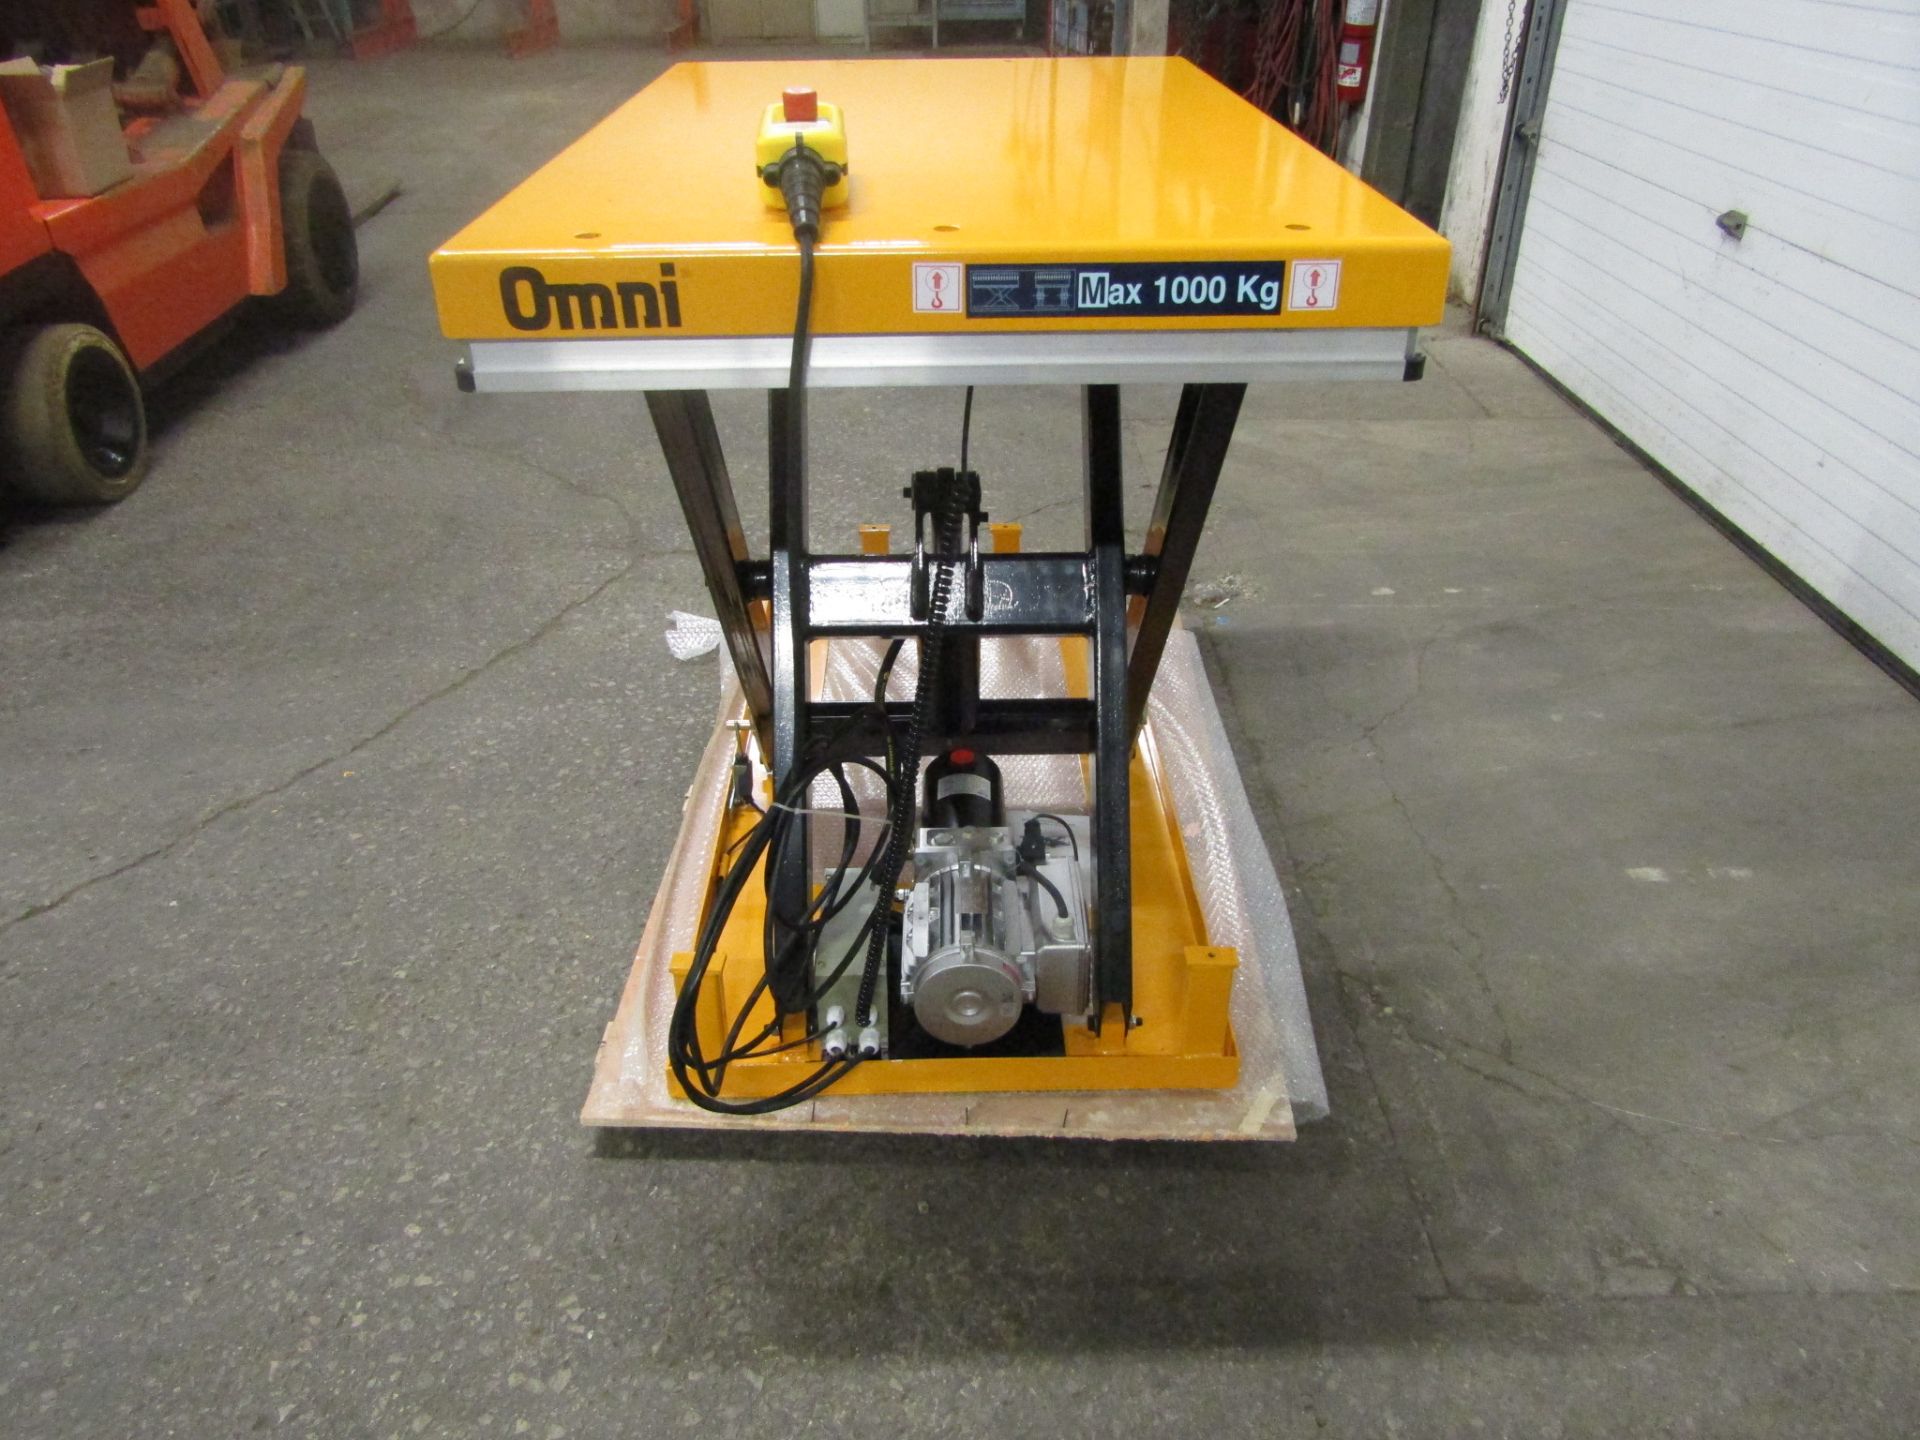 Omni Hydraulic Lift Table 32" x 52" x 40" lift - 2000lbs capacity - MINT - 115V - Image 2 of 3